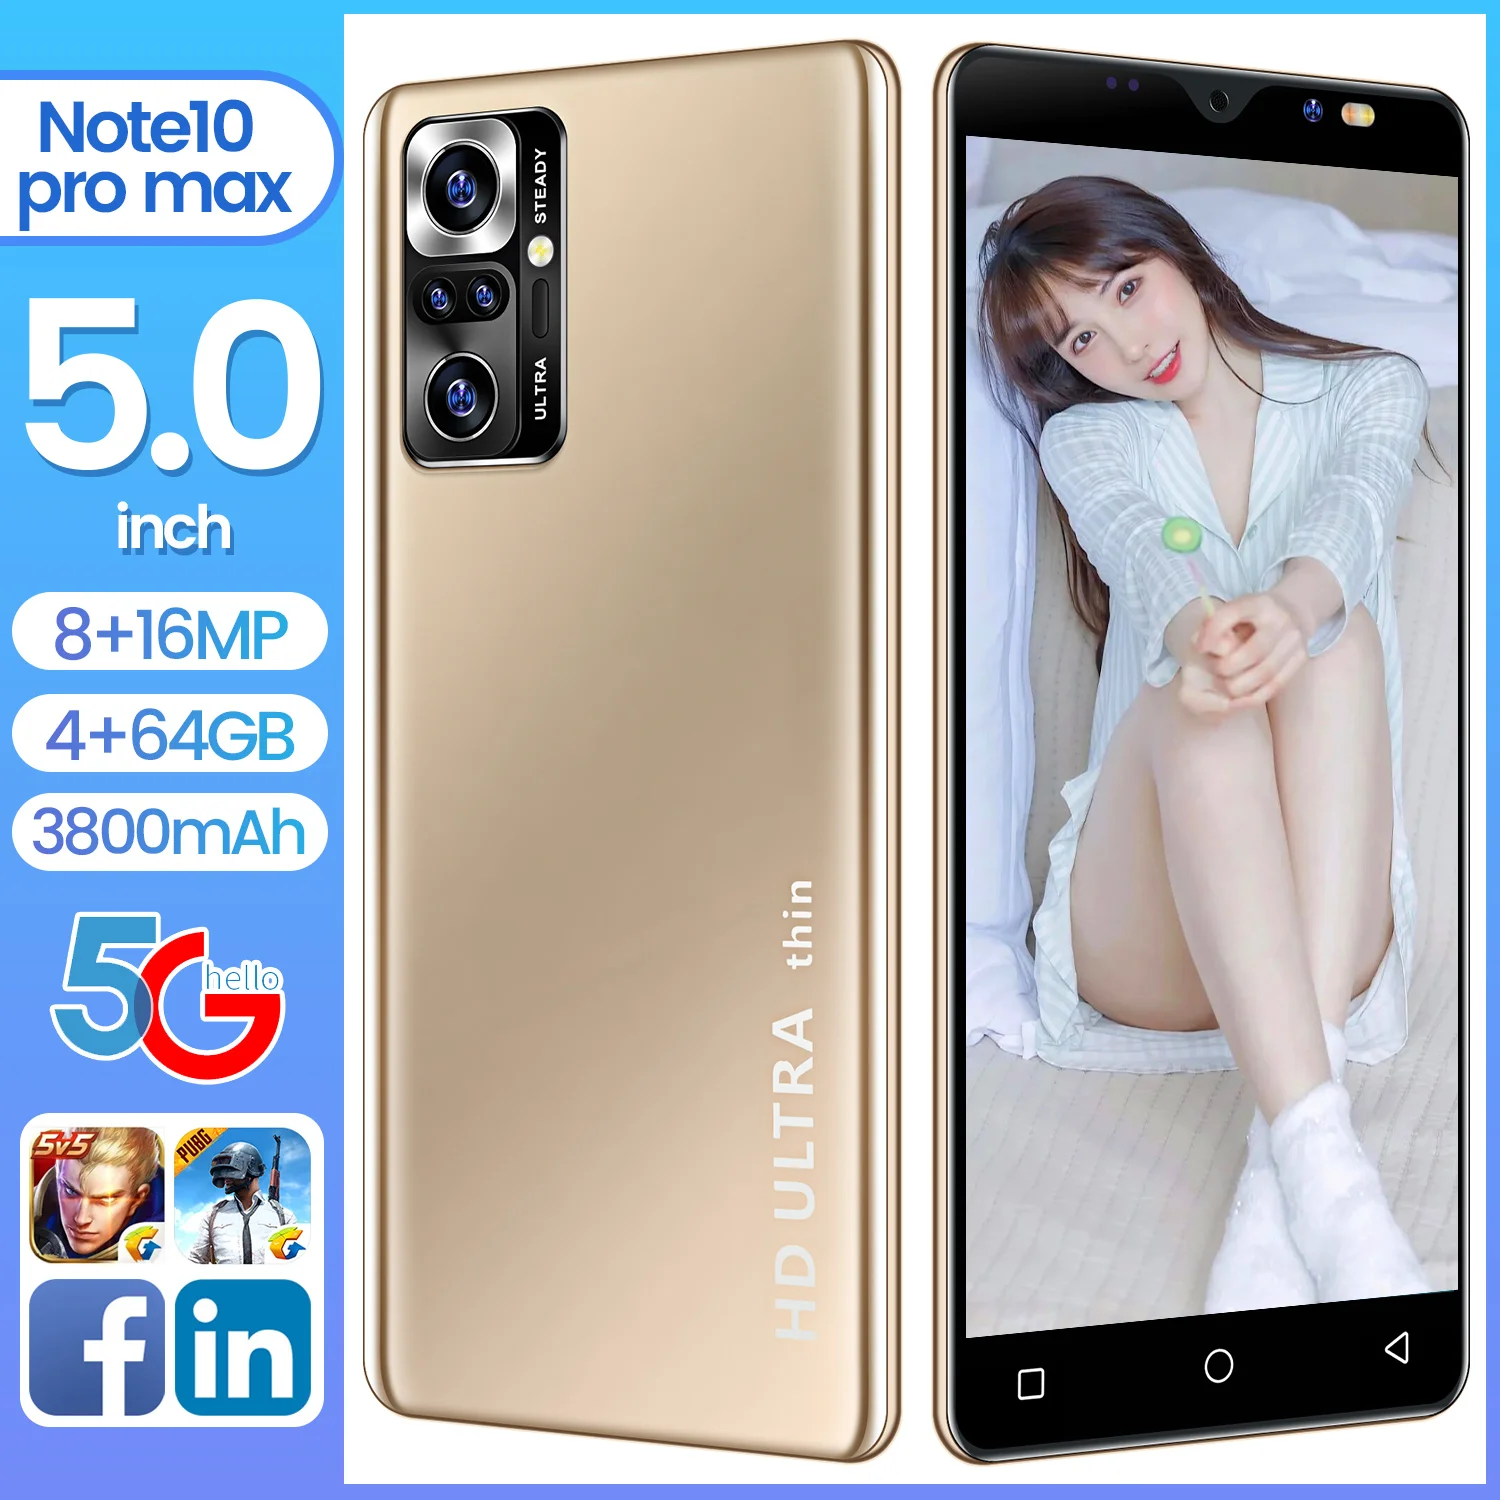 

hot Note10 Pro Max 5.0 Inch Smartphone 8MP+16MP Full Screen 4GB+64GB 3800mAh Full Screen Fingerprint ID 5G Mobilephone Cellphone